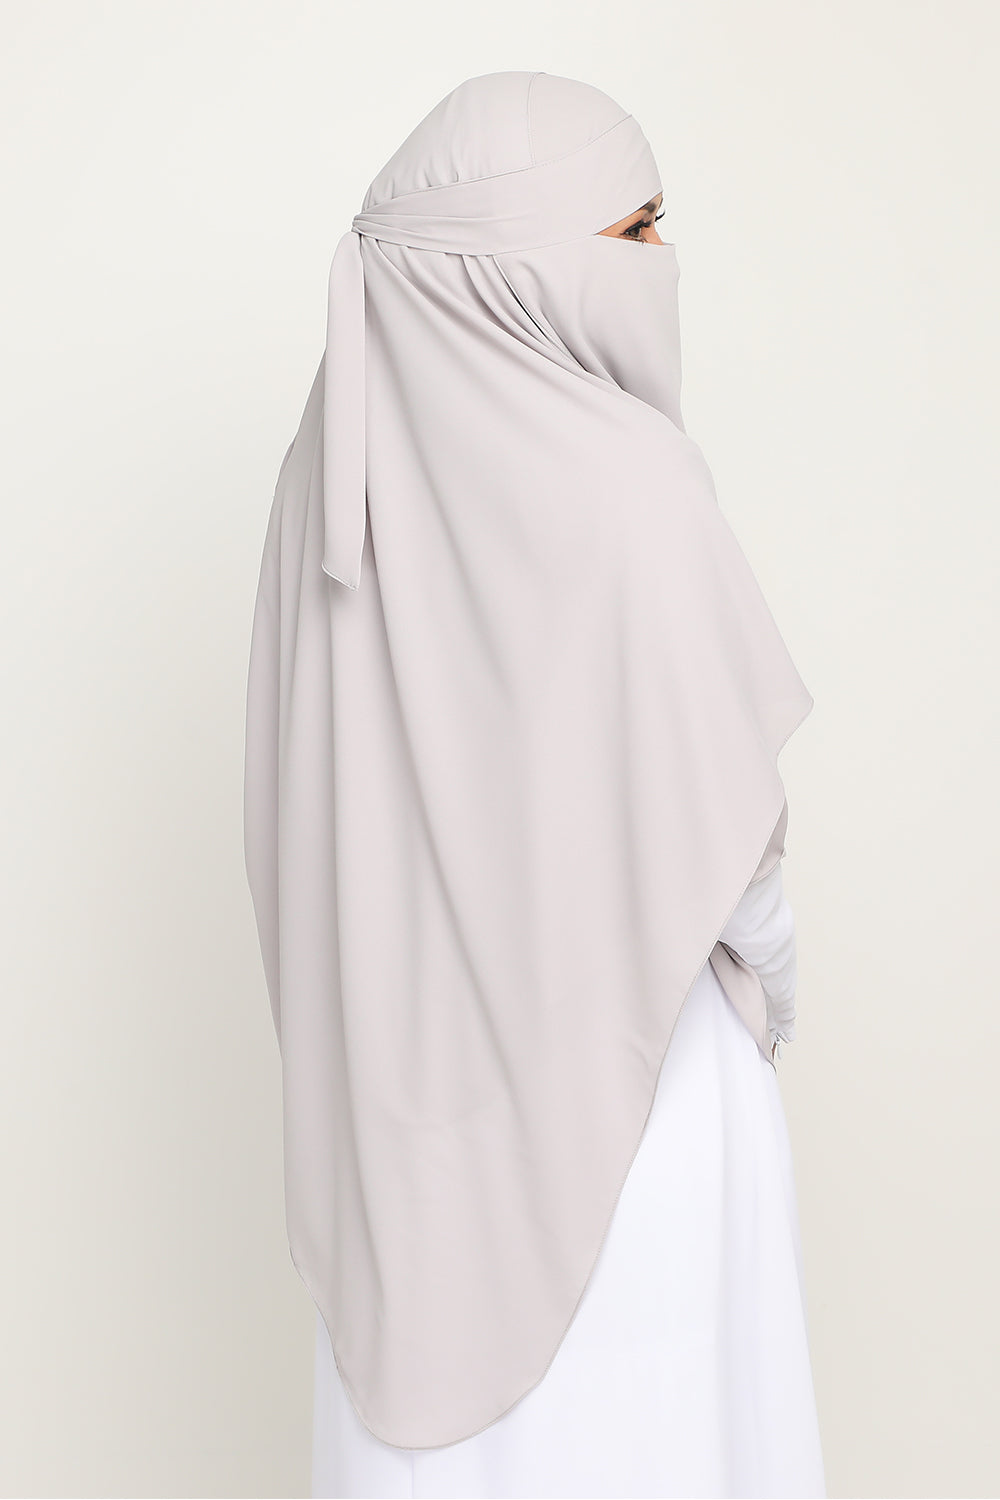 Instant Niqab Iris Grey